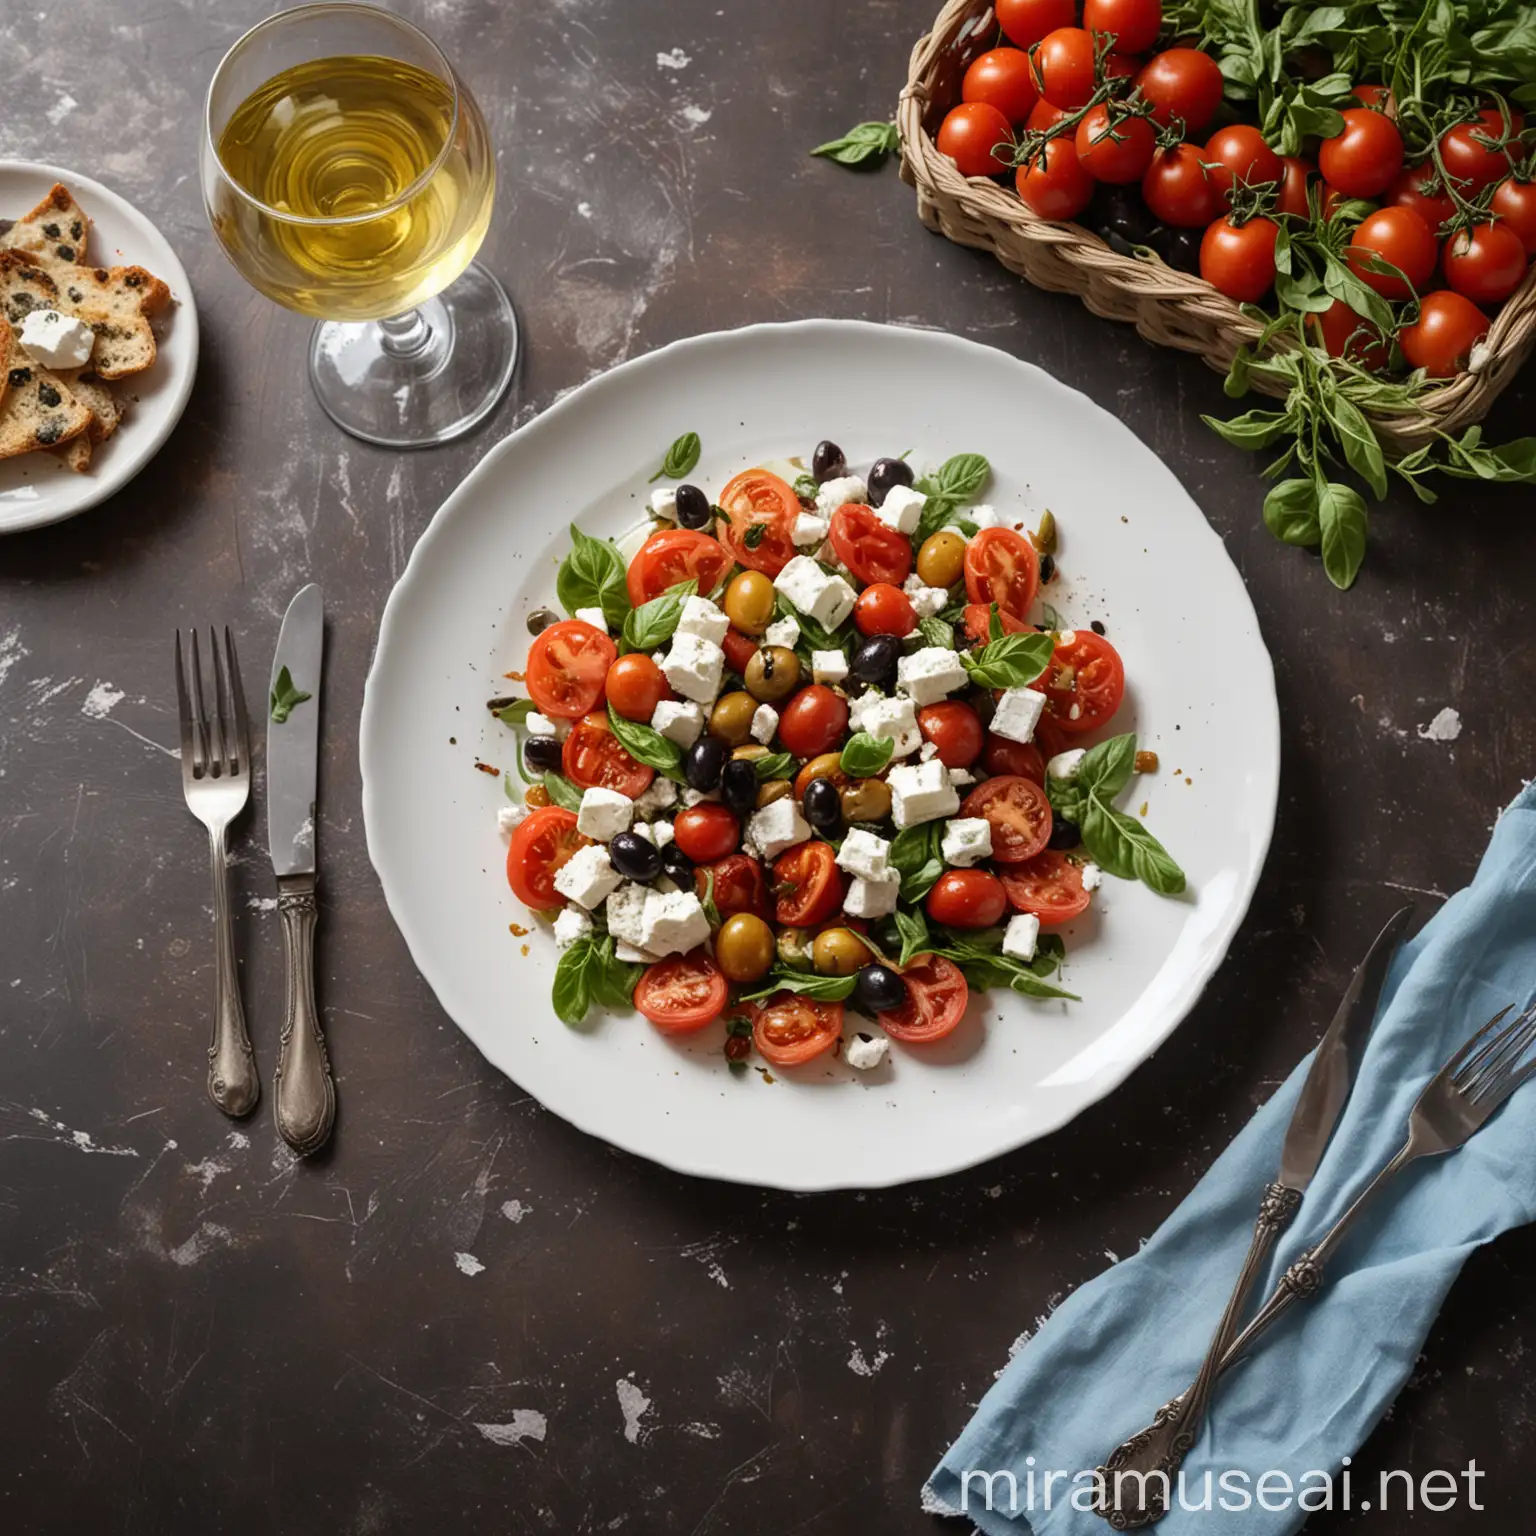 Mediterranean Salad with Feta and Olives Served in Elegant Restaurant Setting